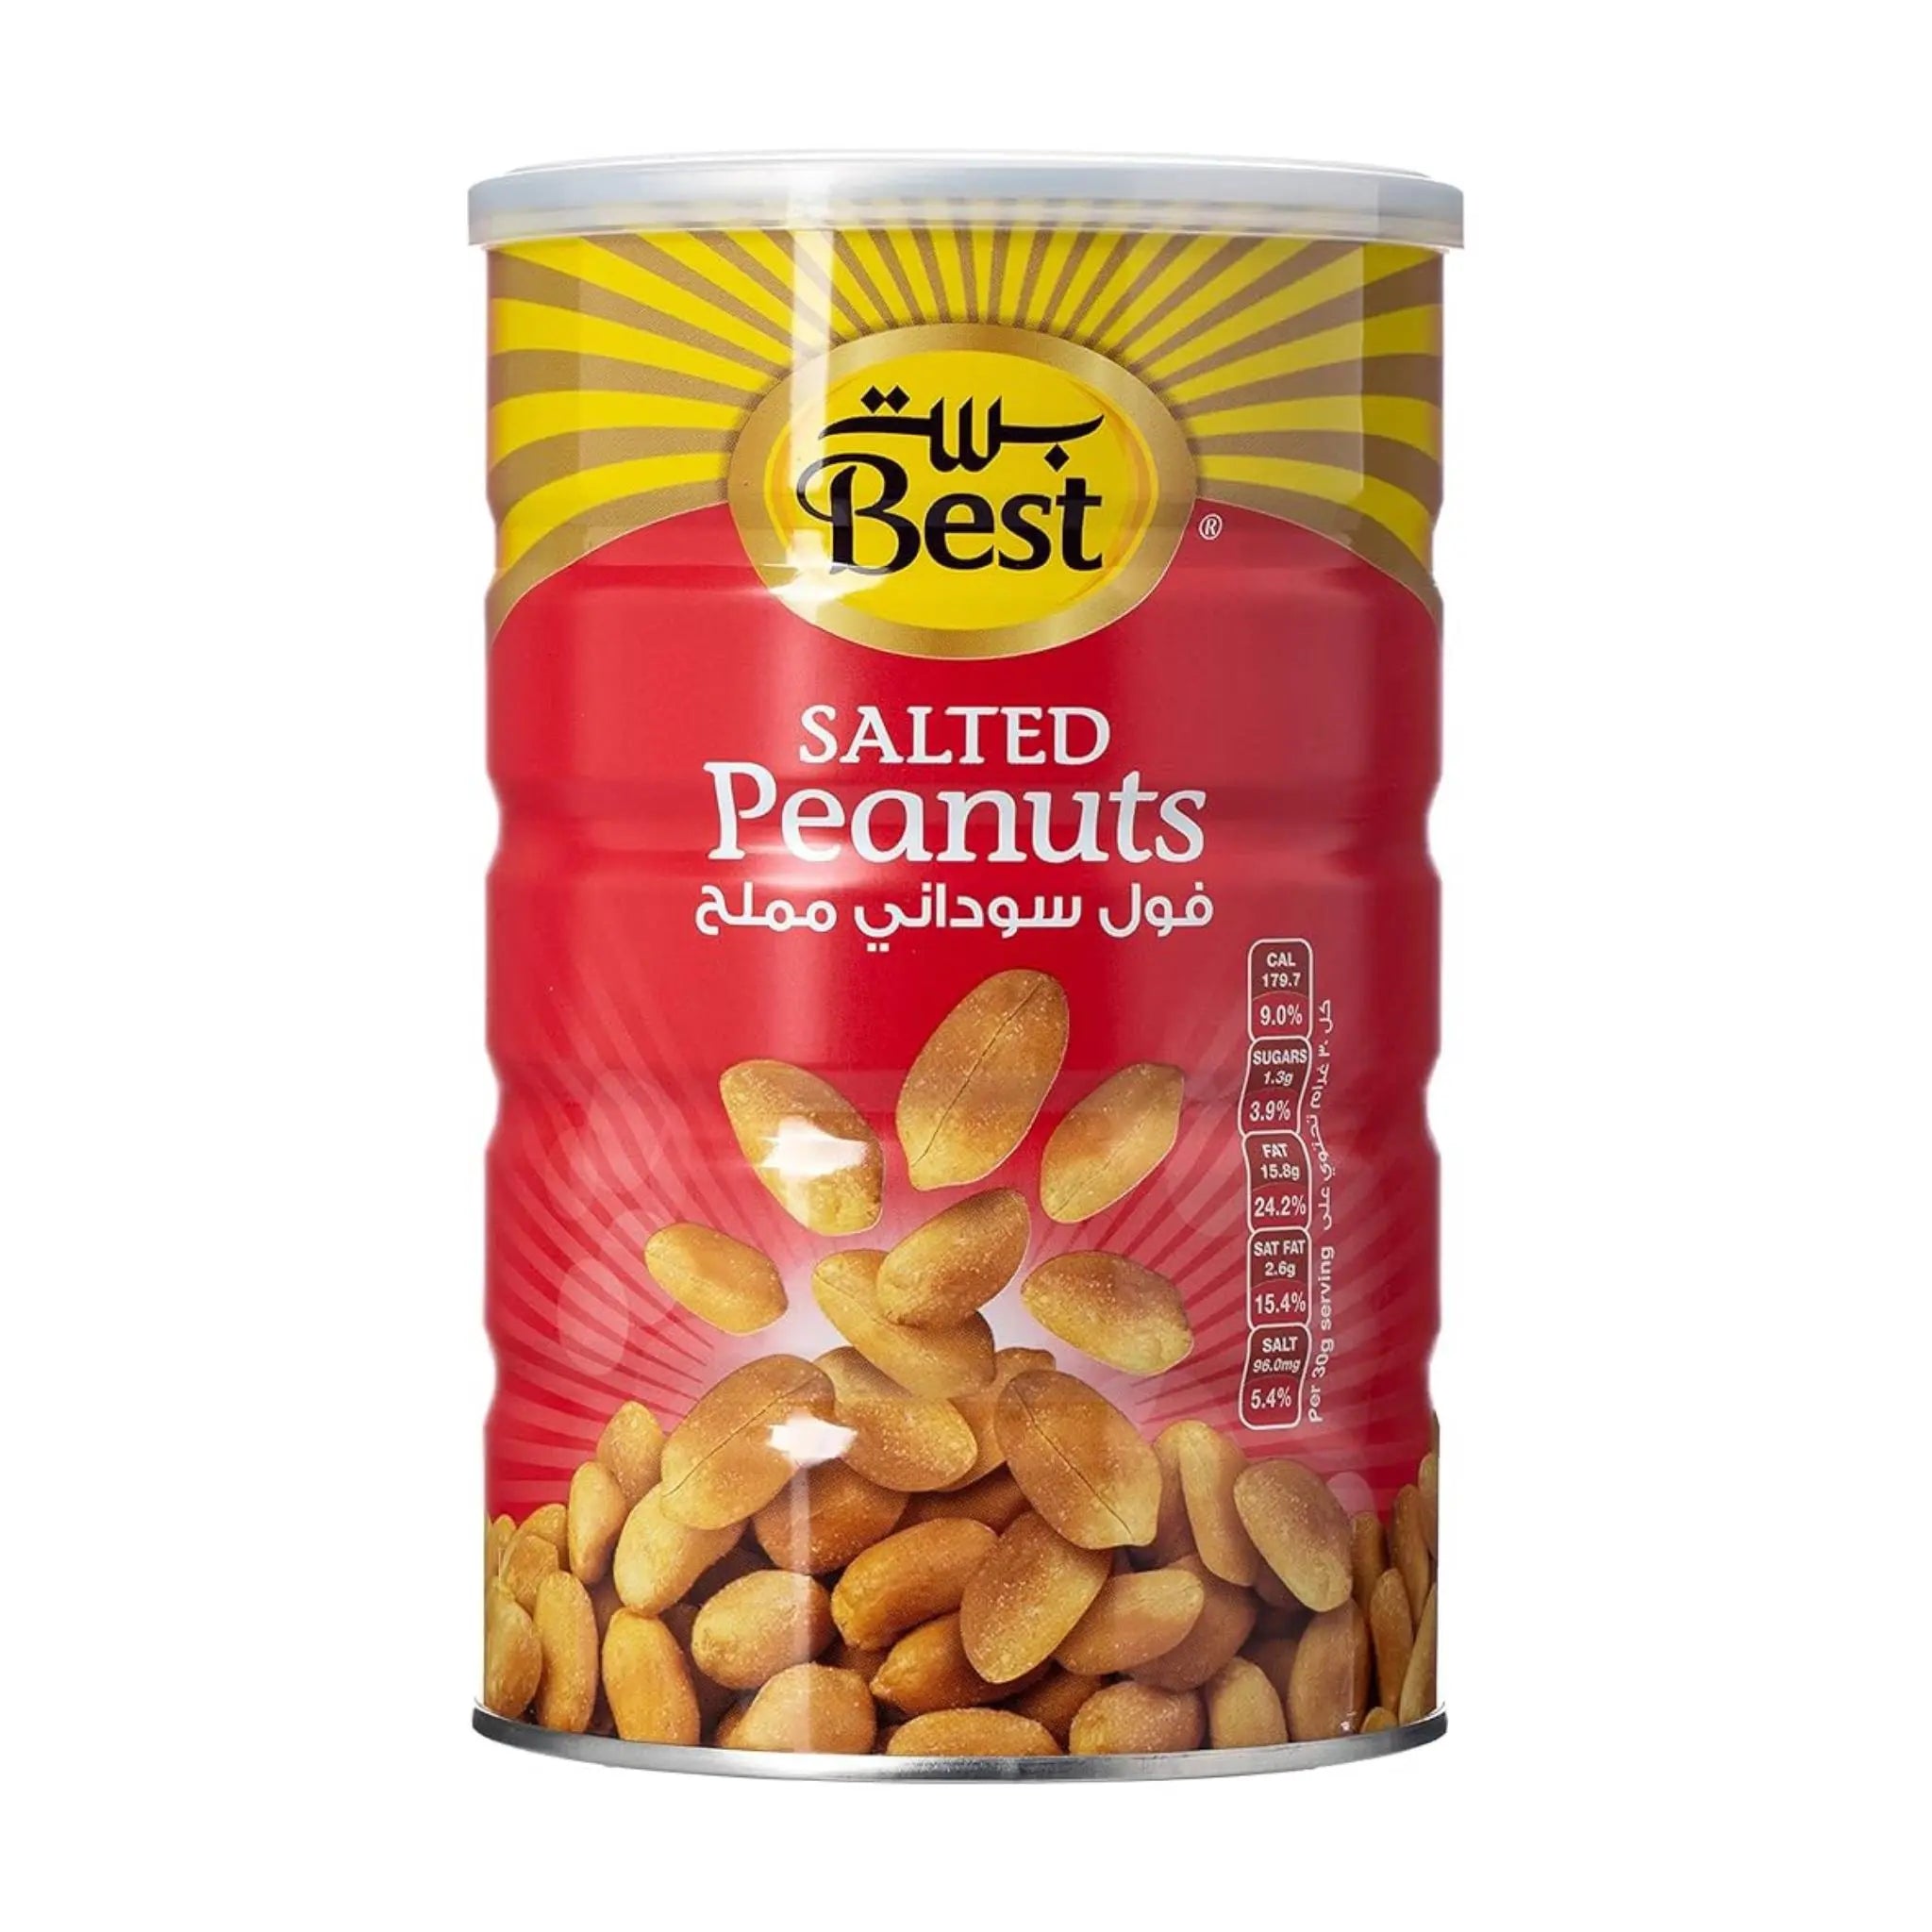 Best Salted Peanuts - 12x550g (1 carton) - Marino.AE